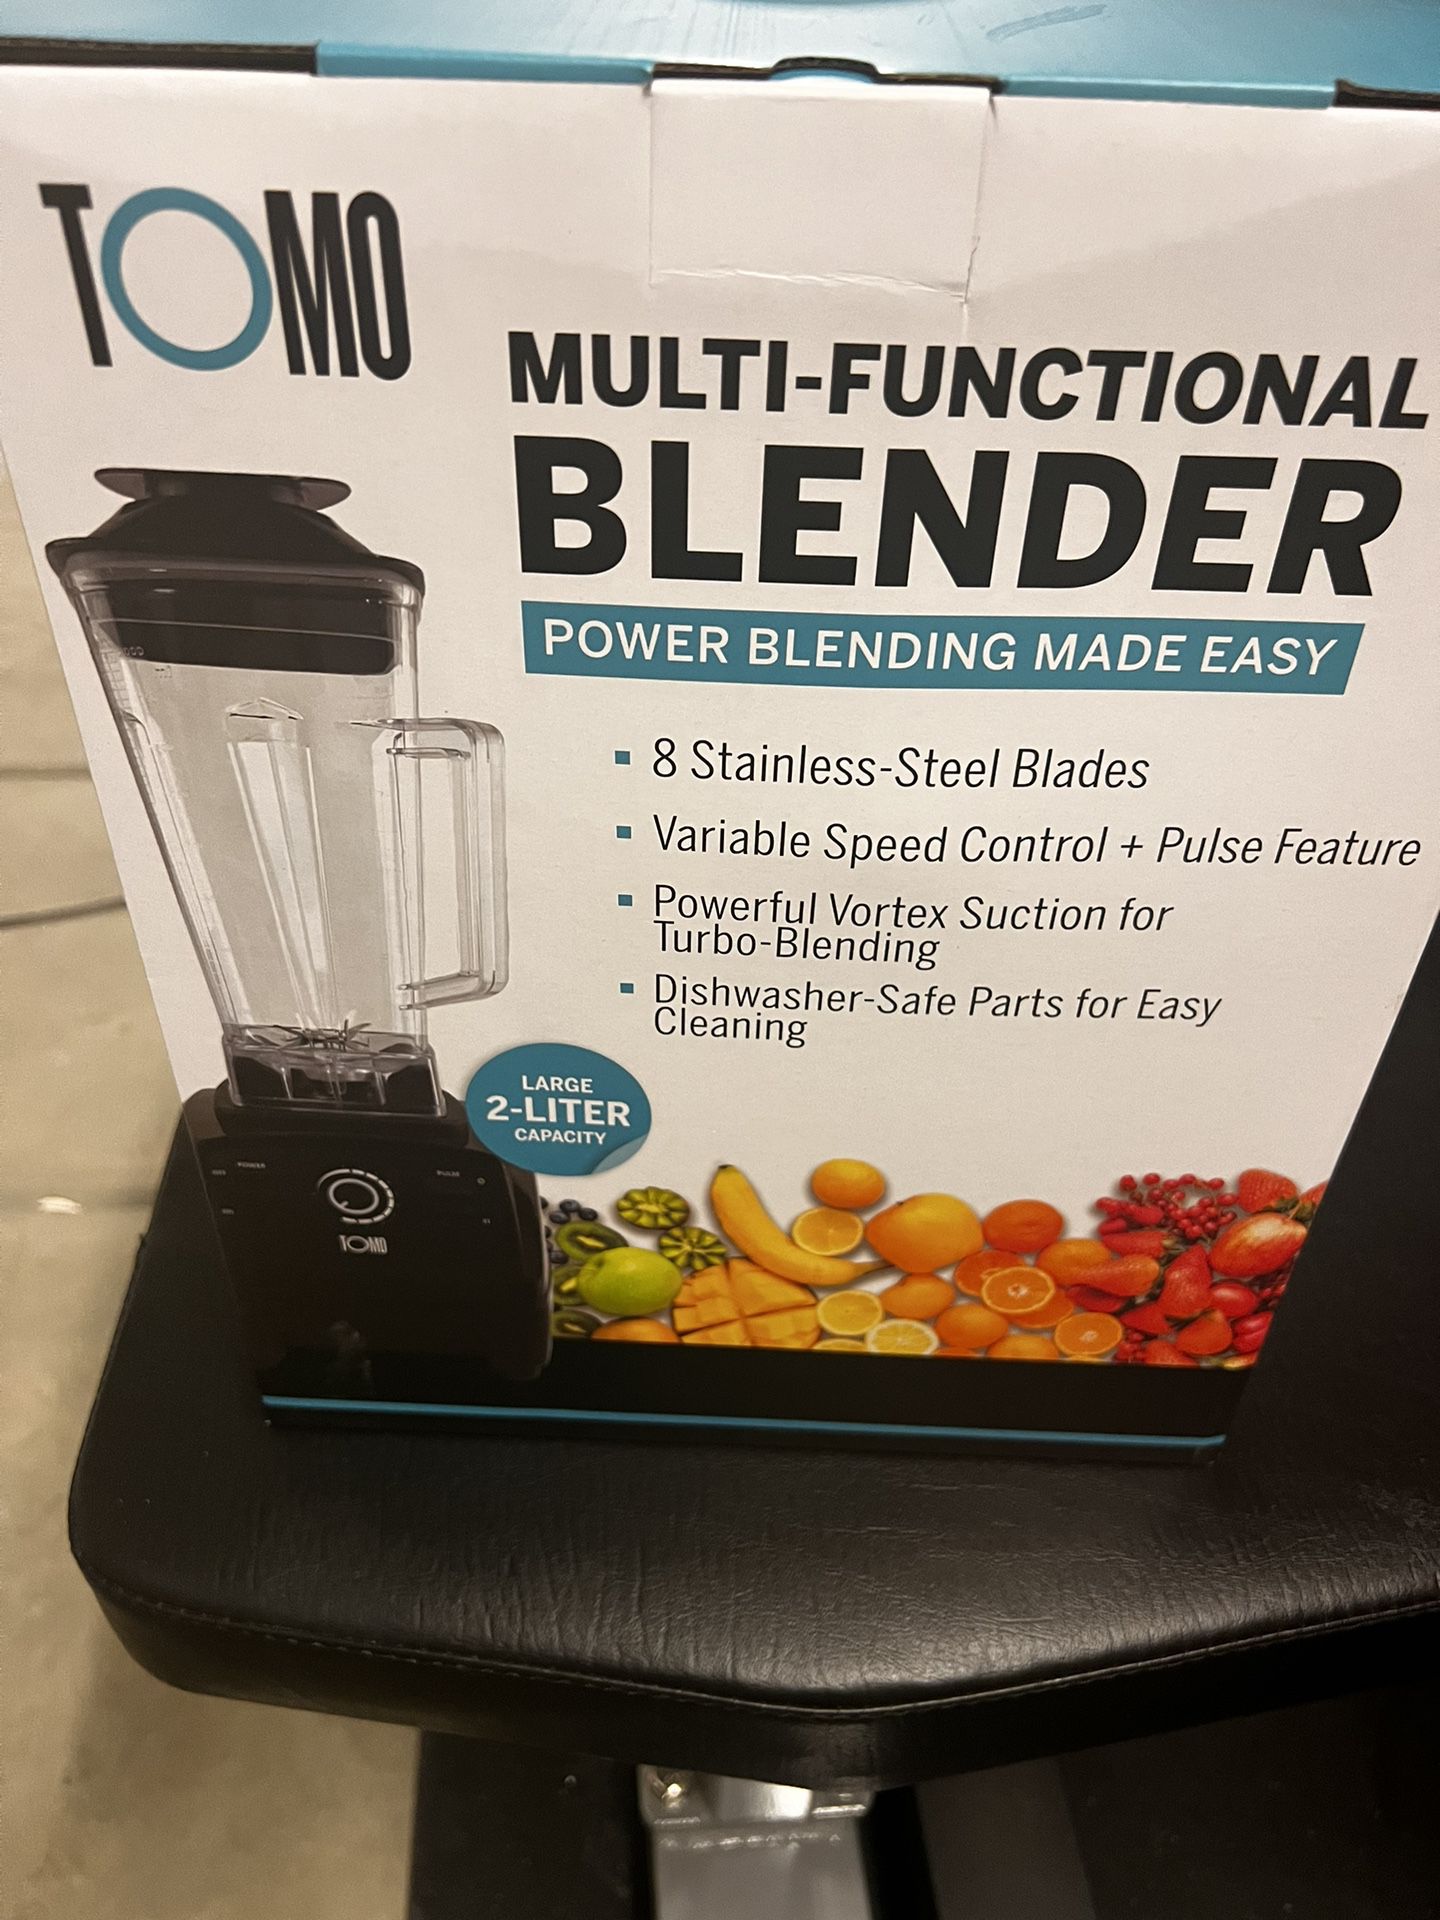 Braun MultiQuick 7 Blender for Sale in San Pedro, CA - OfferUp